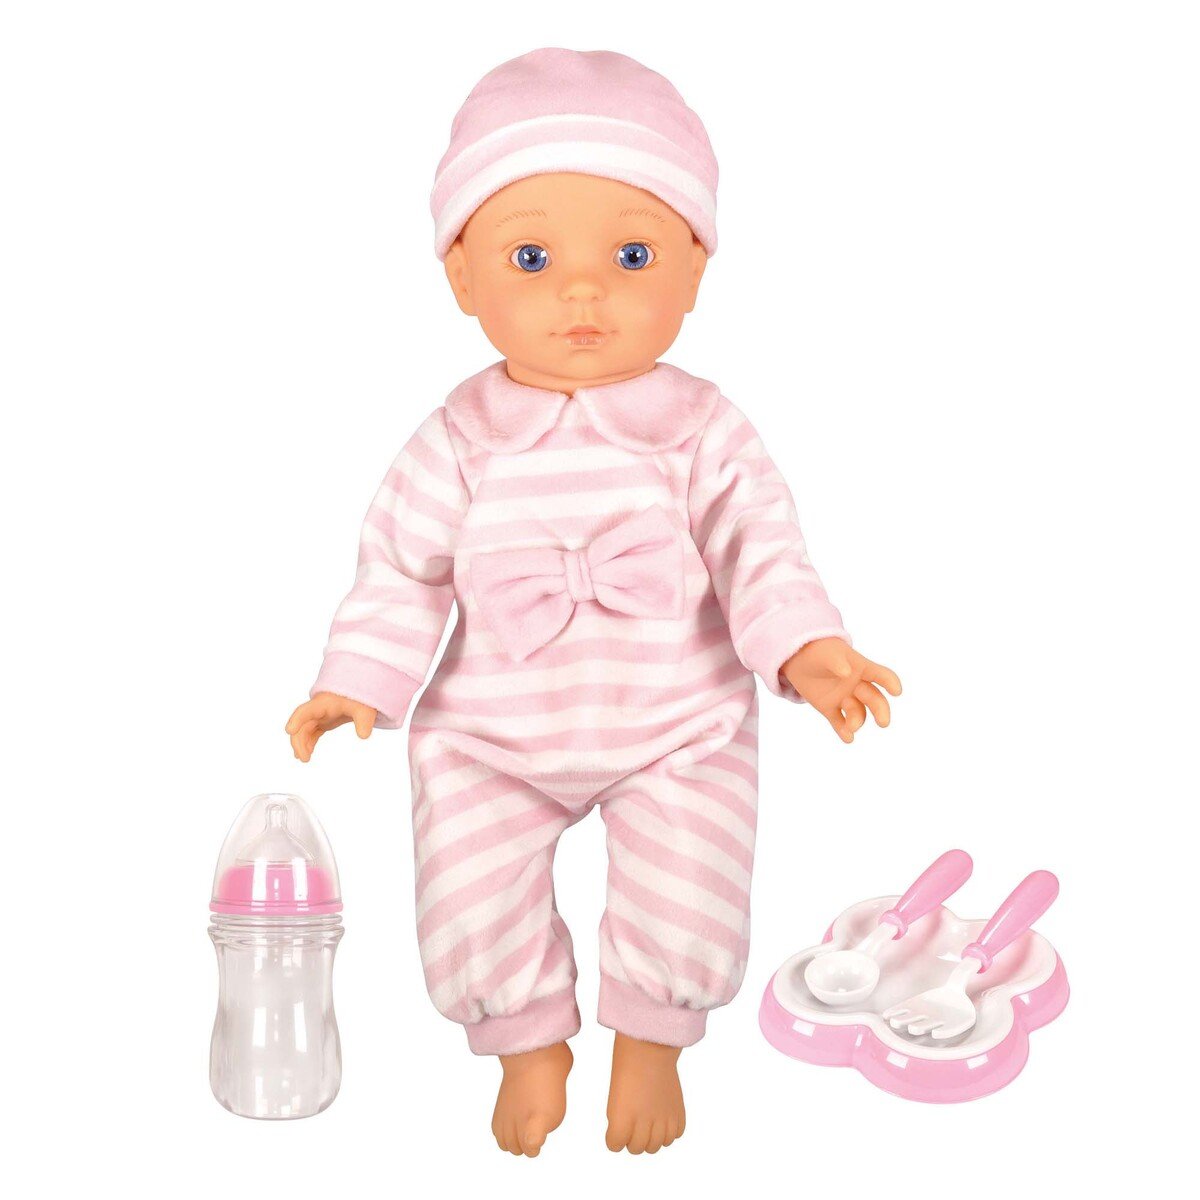 Lotus Baby Doll Caucasian 40cm LT16014 Assorted